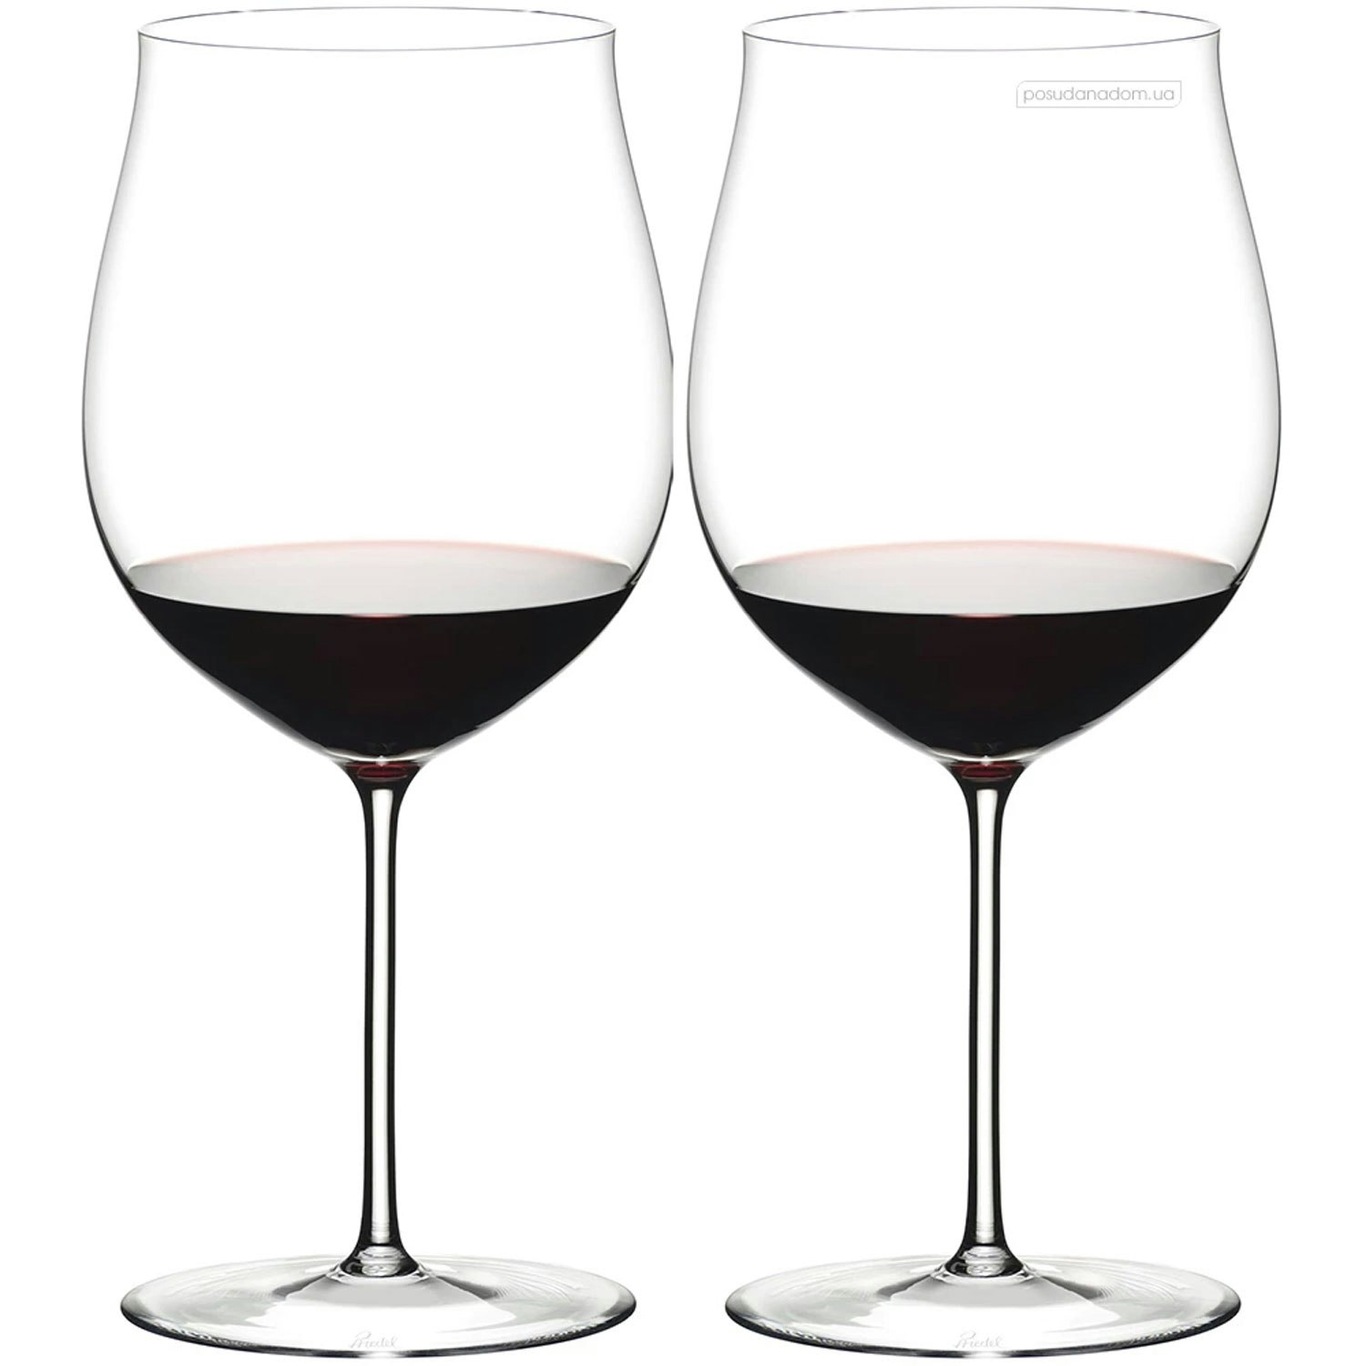 https://royaldesign.com/image/11/riedel-265th-anniversary-burgundy-grand-cru-wine-glass-2-pack-2?w=800&quality=80